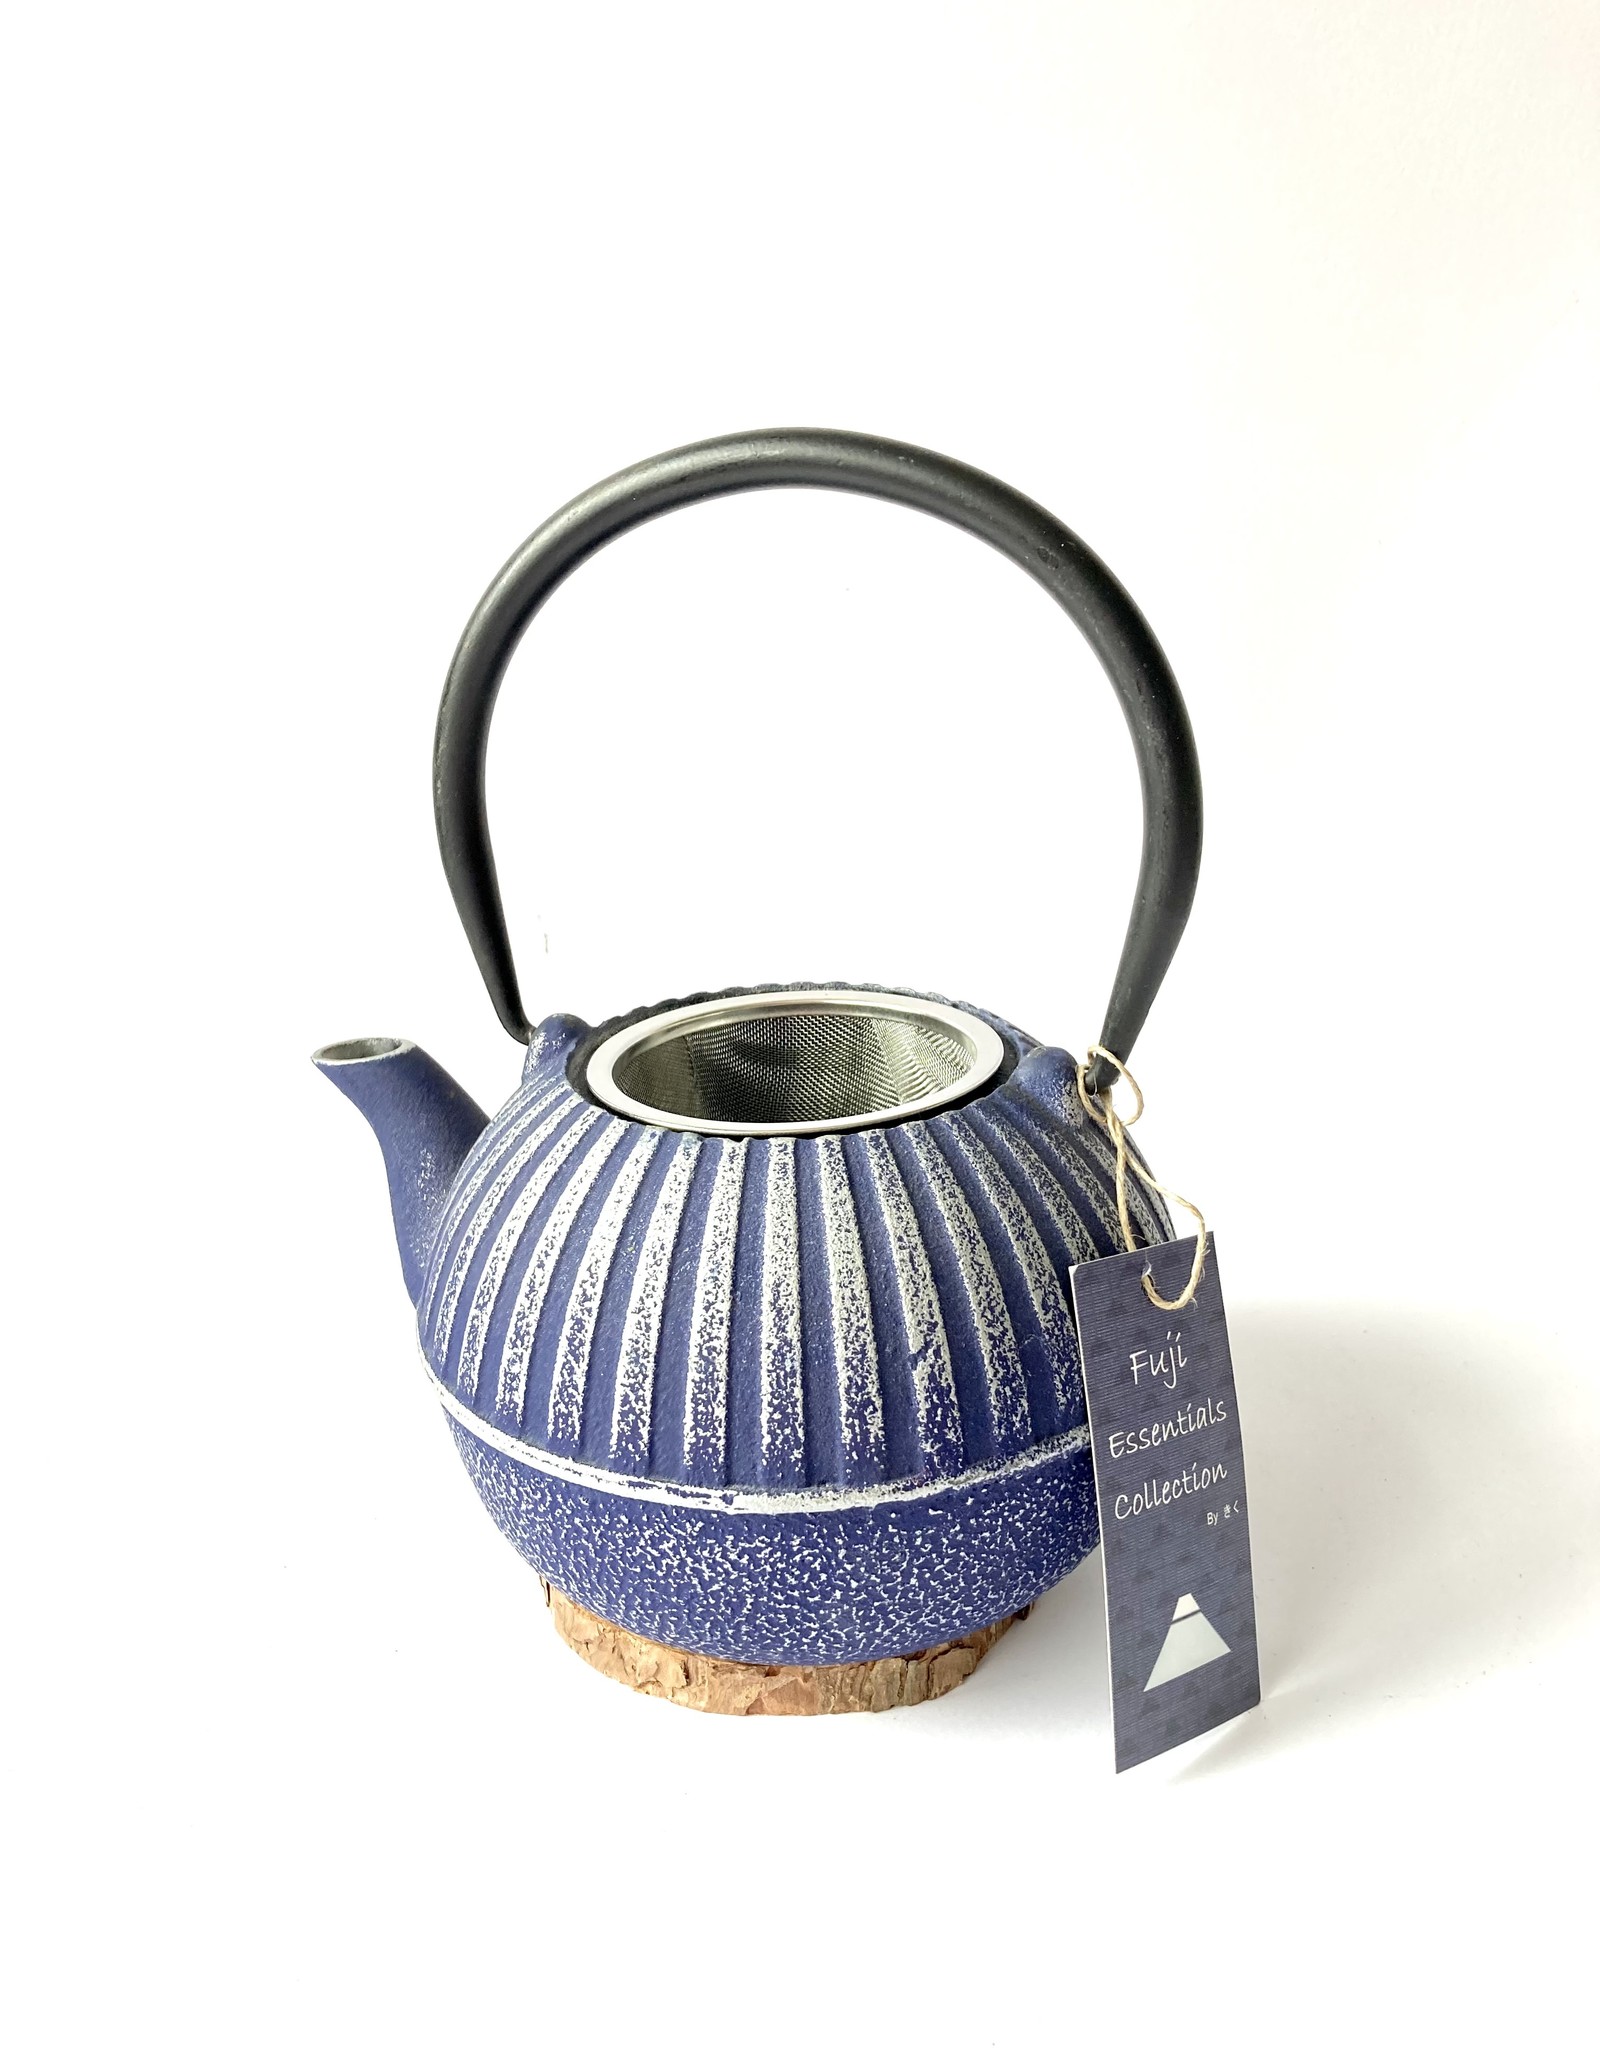 Light Blue Round Cast Iron Teapot